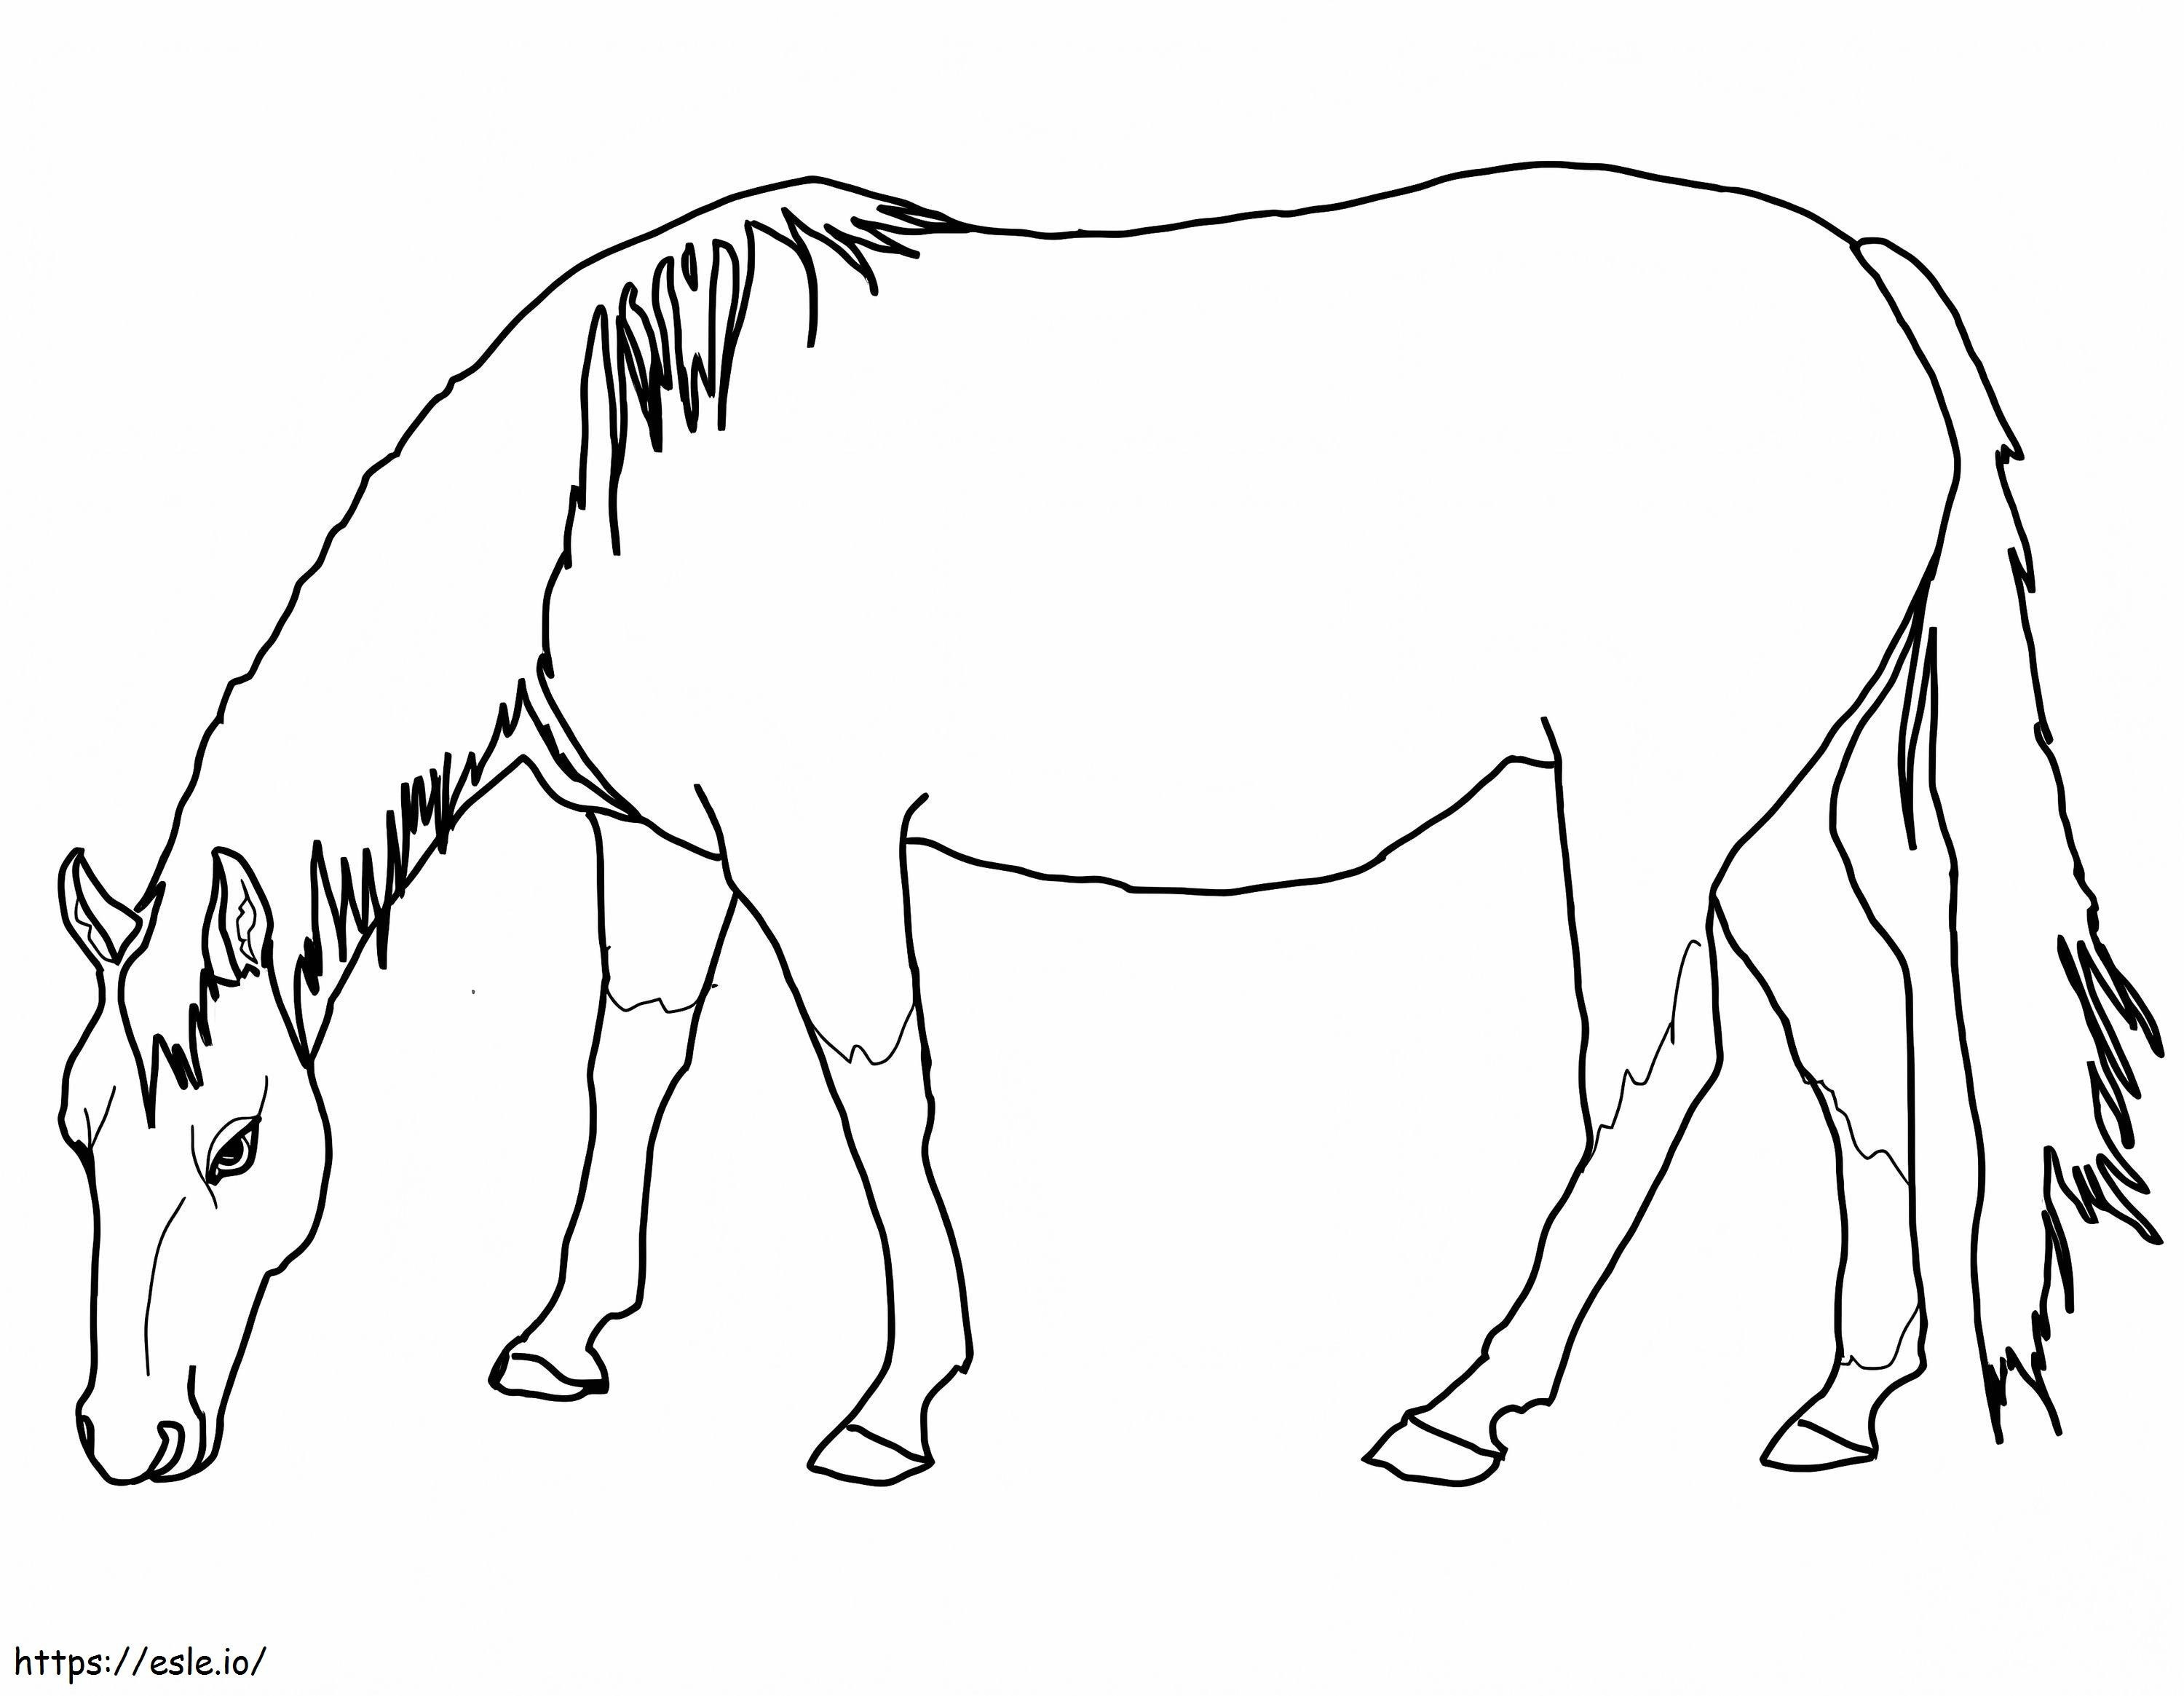 Cavalo Quarto de Milha Americano para colorir